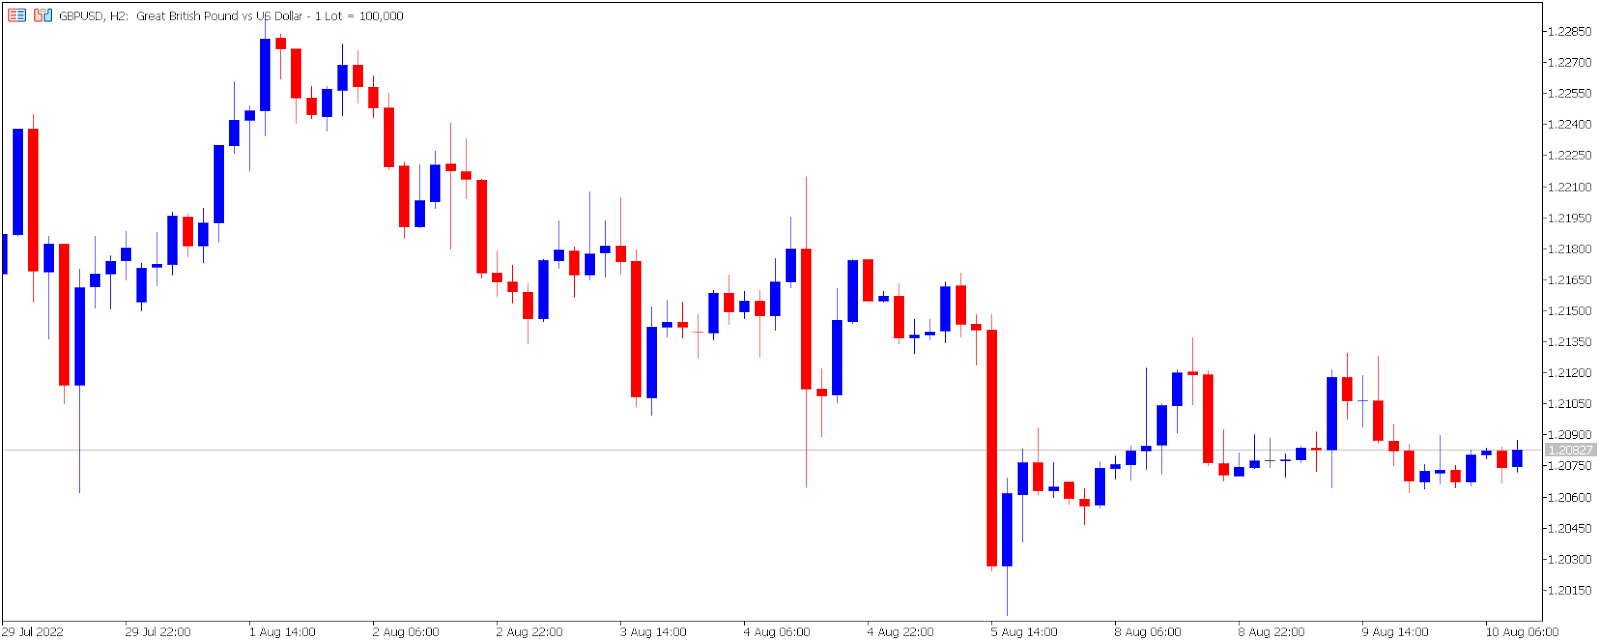 GBP/USD 2-hour price chart.